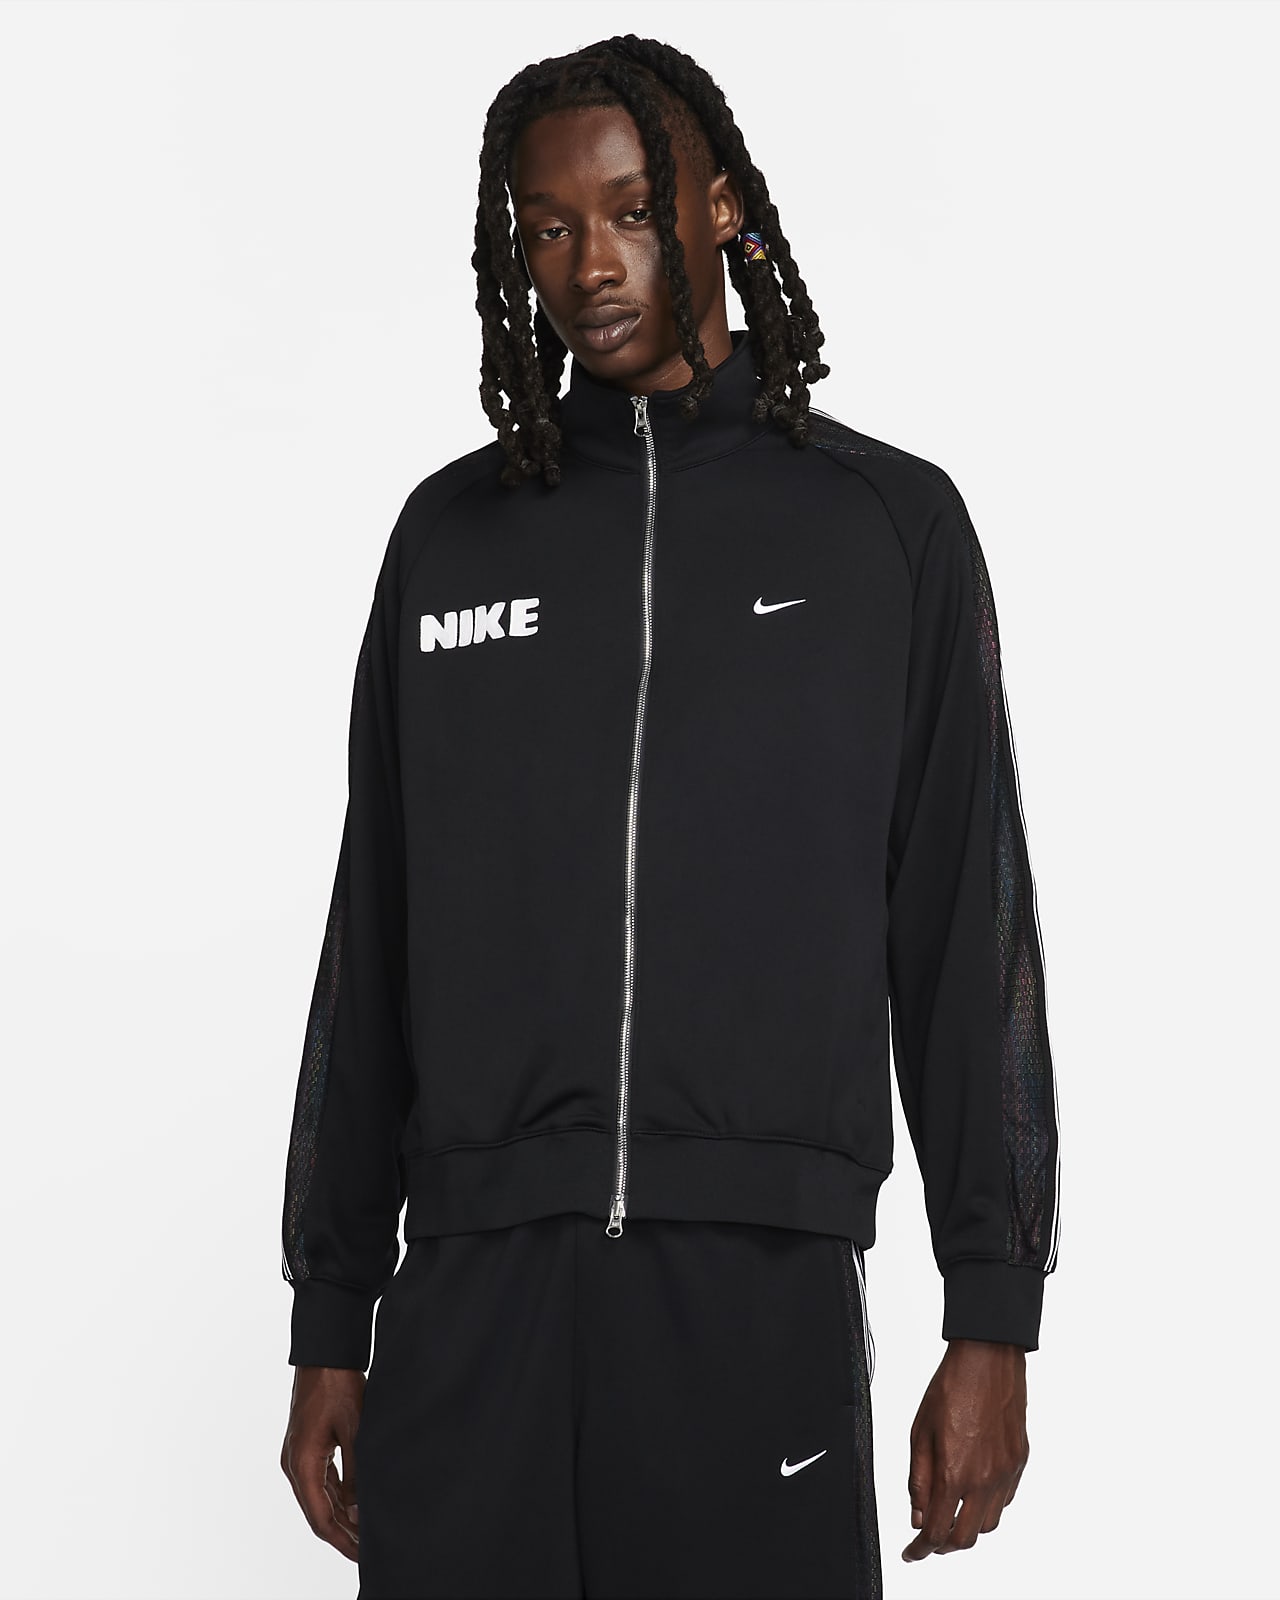 Nike Men's Lightweight Full-Zip Basketball Jacket